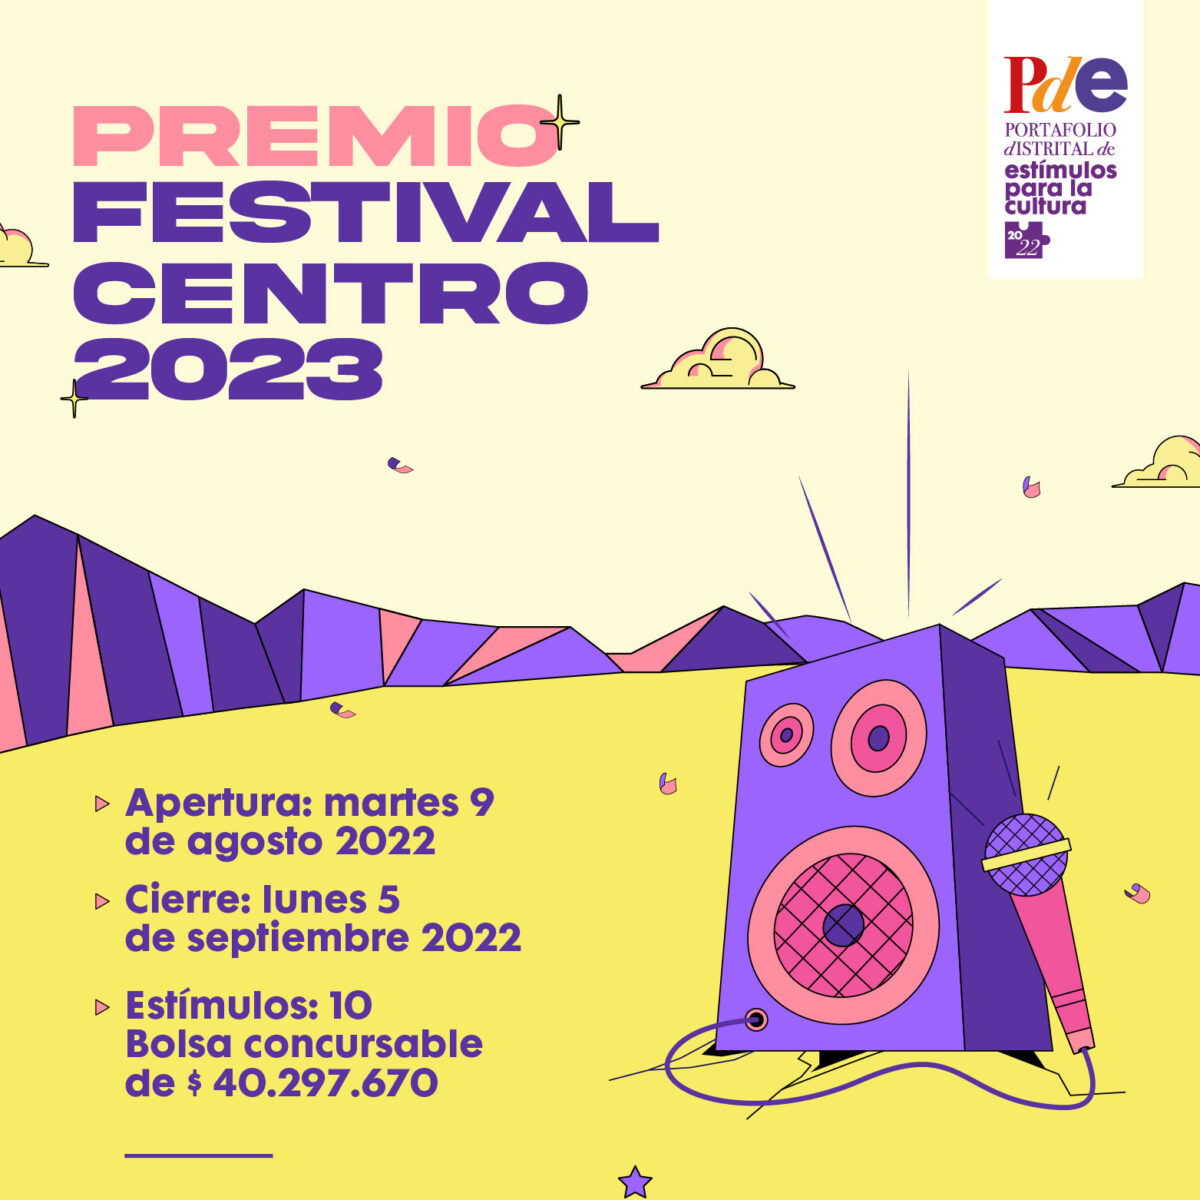 Convocatoria Premio Festival Centro 2023 Programa Distrital de Estimulos para la Cultura